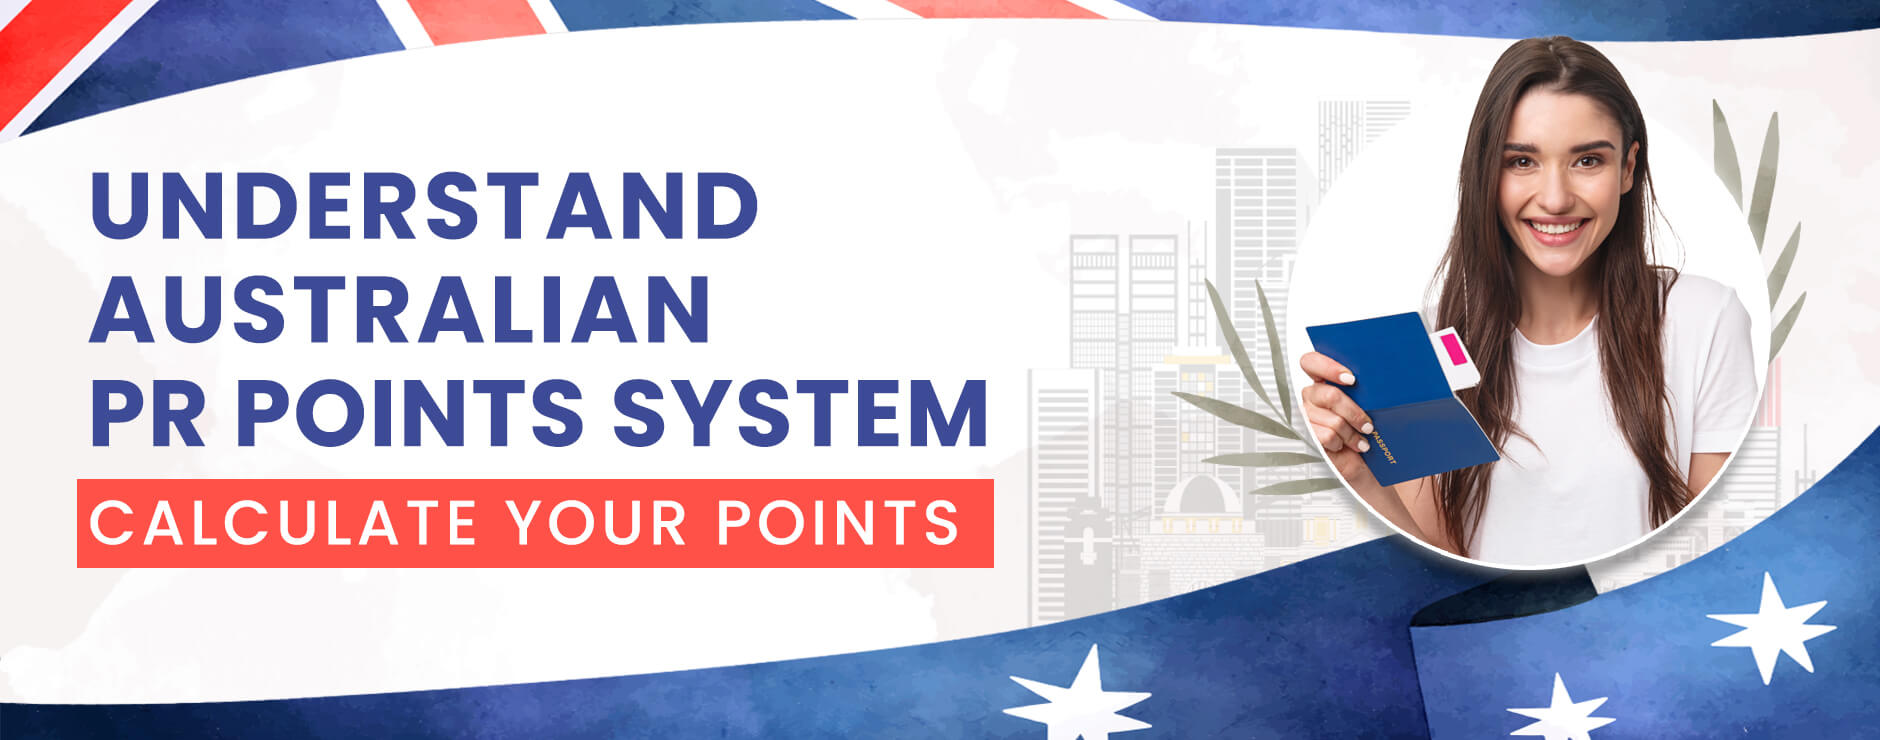 Understand the Australian PR Points System: PR Points Calculator